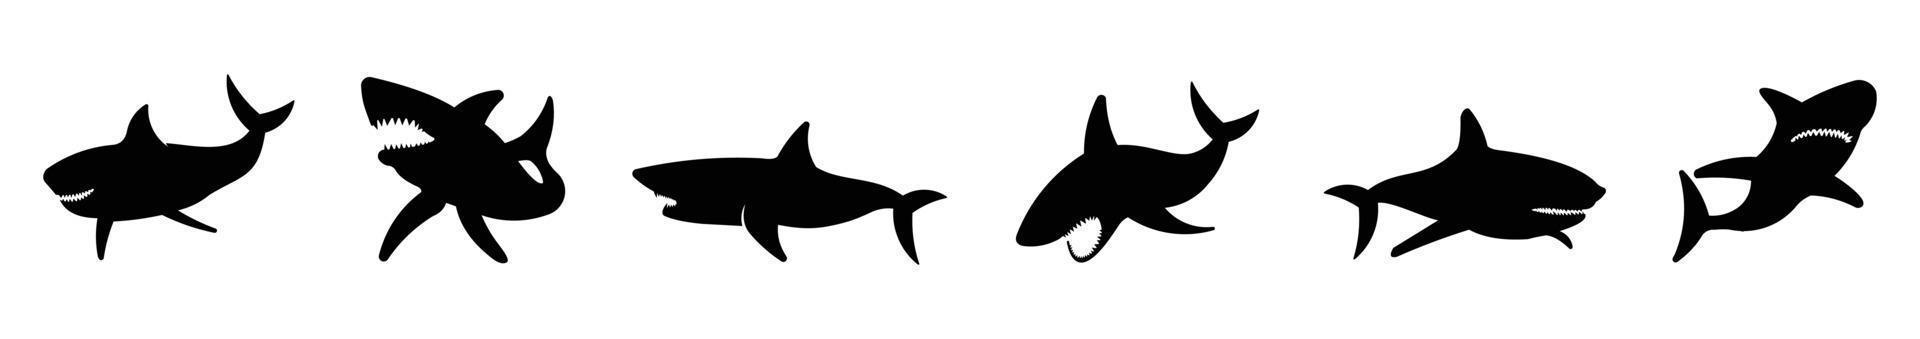 haj stil design i undervattenshavet illustration, vektor illustration haj komisk stil karaktär vilda fisk set